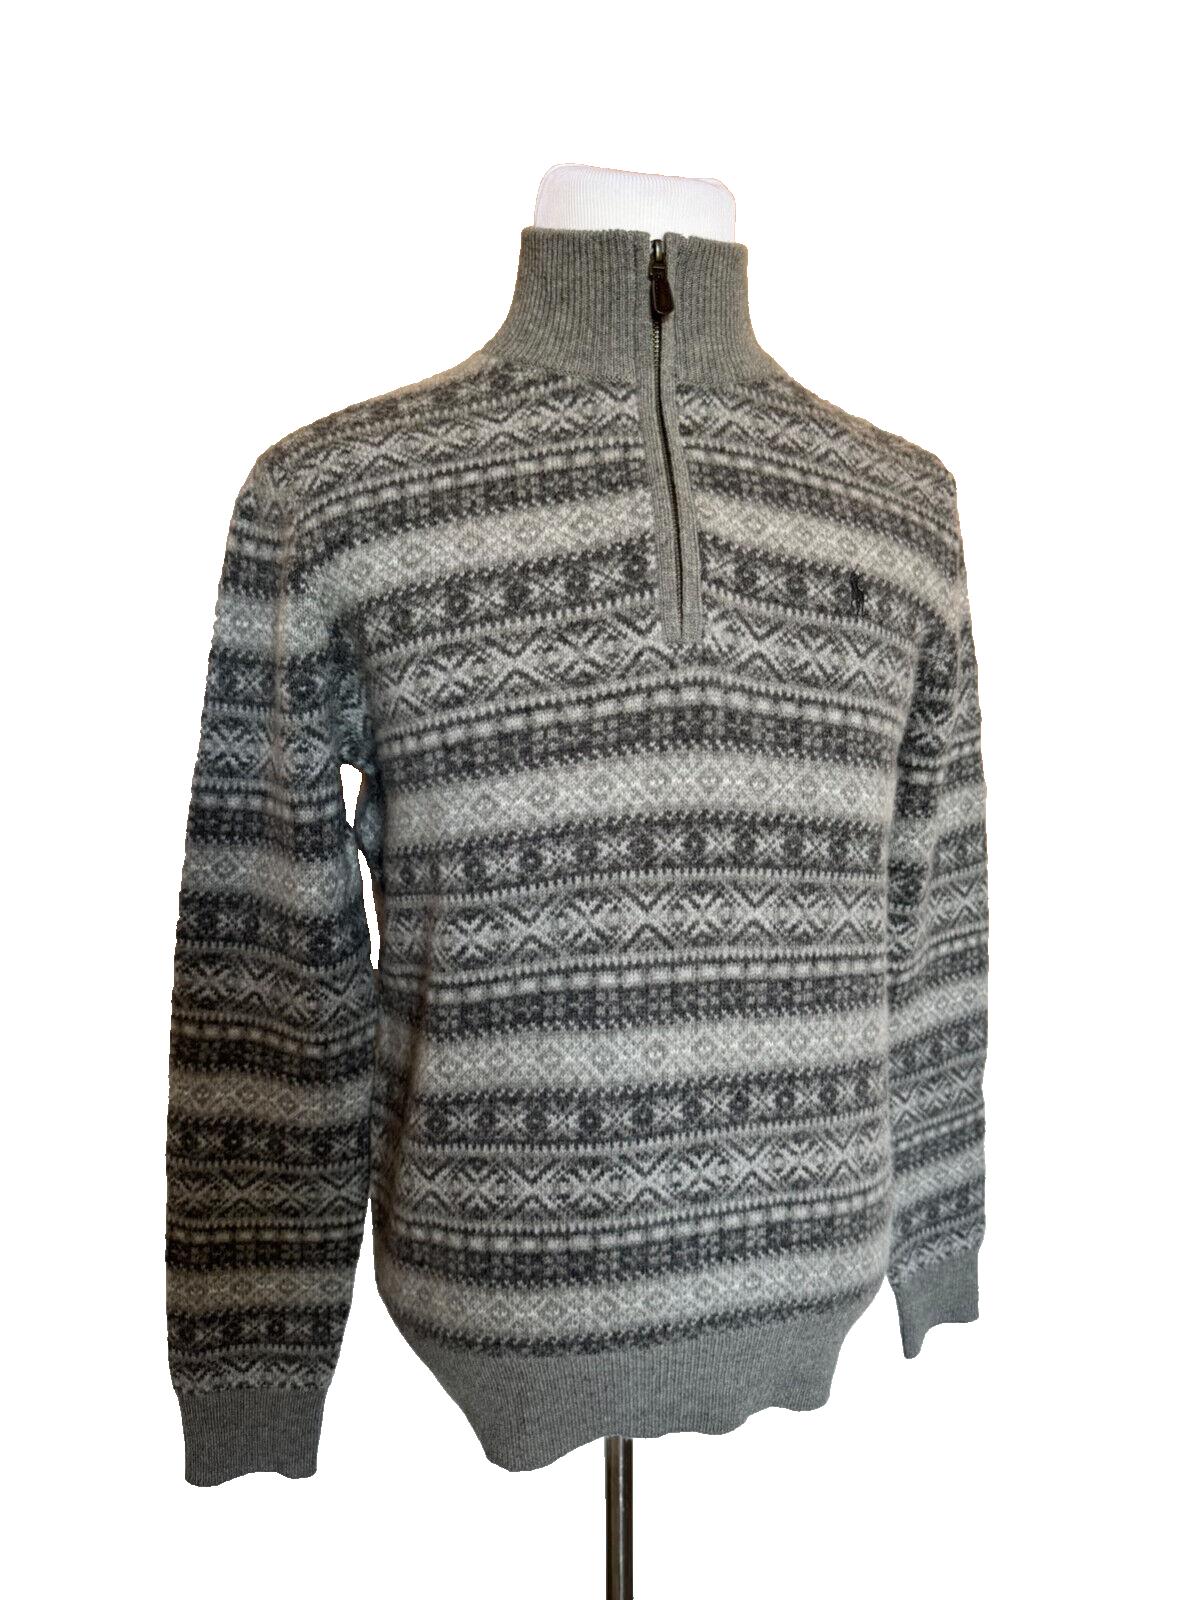 NWT $228 Polo Ralph Lauren Men's Knit Wool/ Alpaca Hair Zip Sweater Small